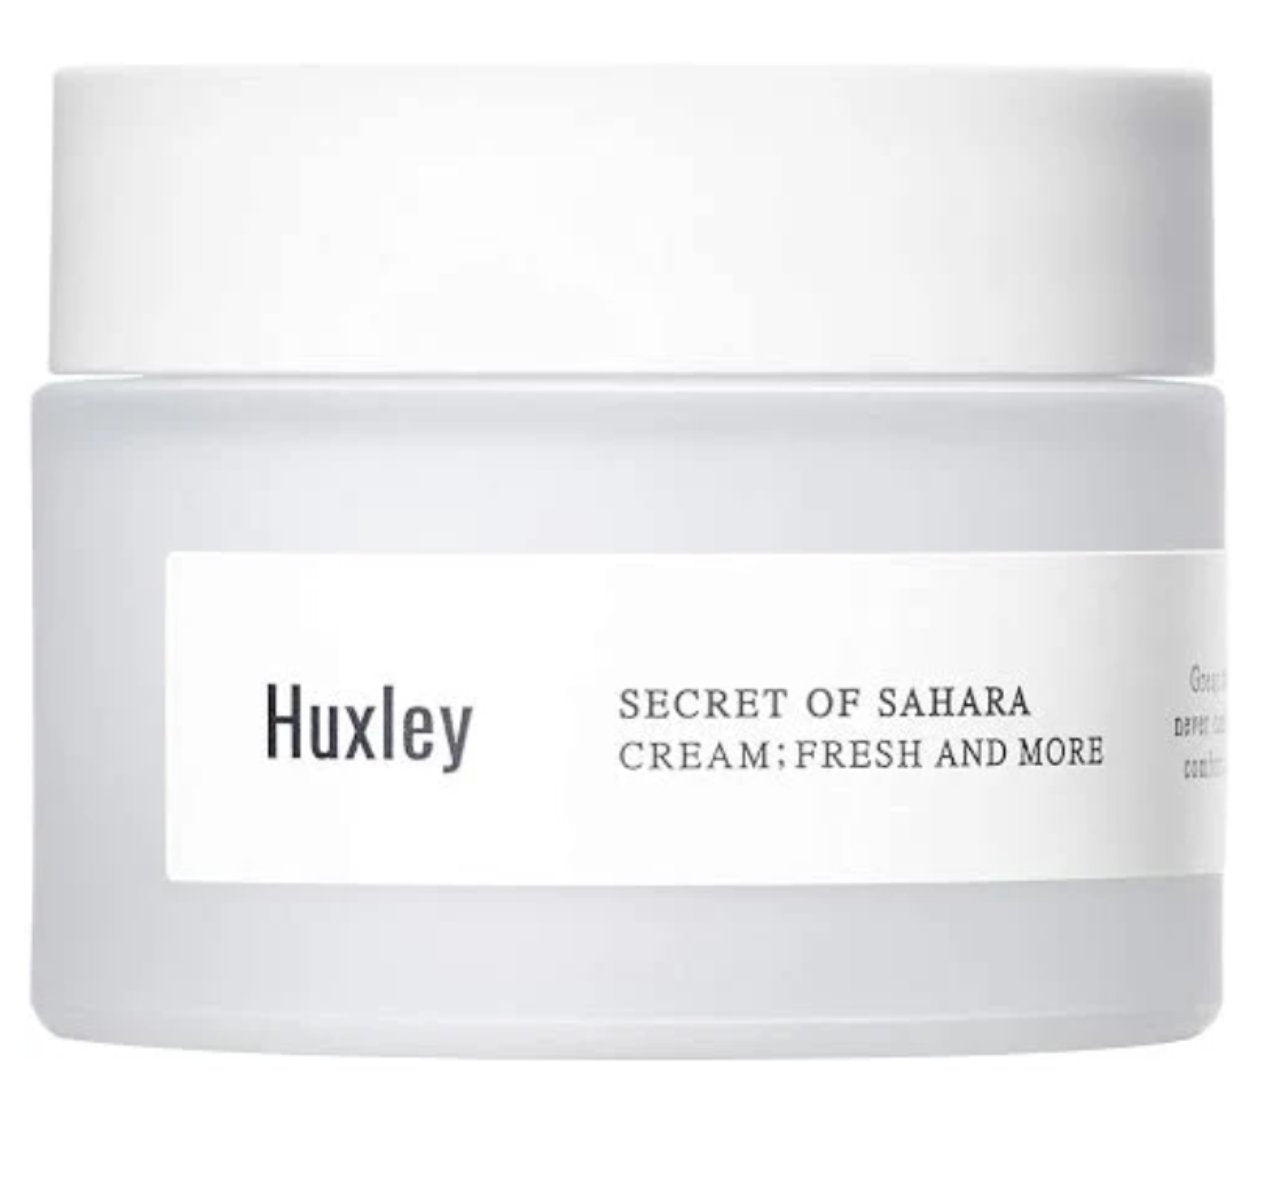 Huxley Secret of Sahara: Fresh and More Cream 50ml - The Face Method